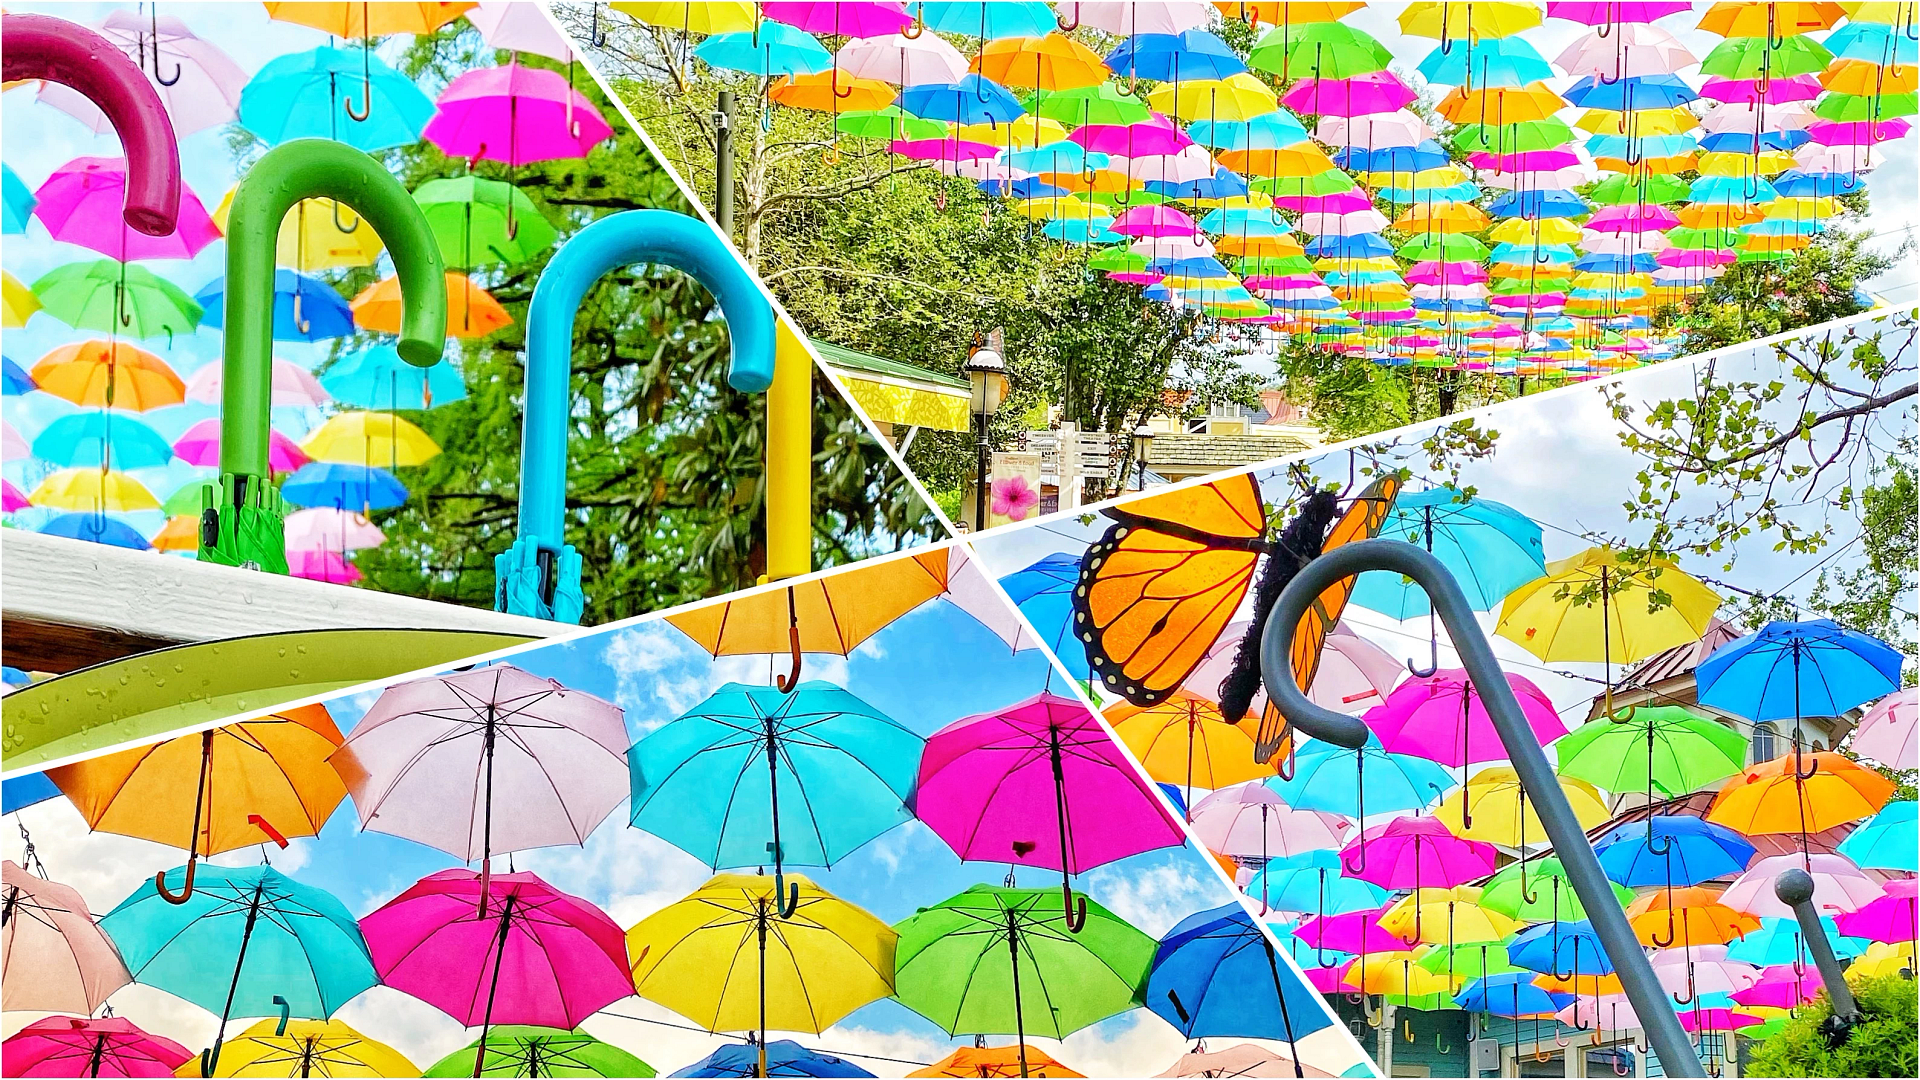 Under an Umbrella Sky at Dollywood